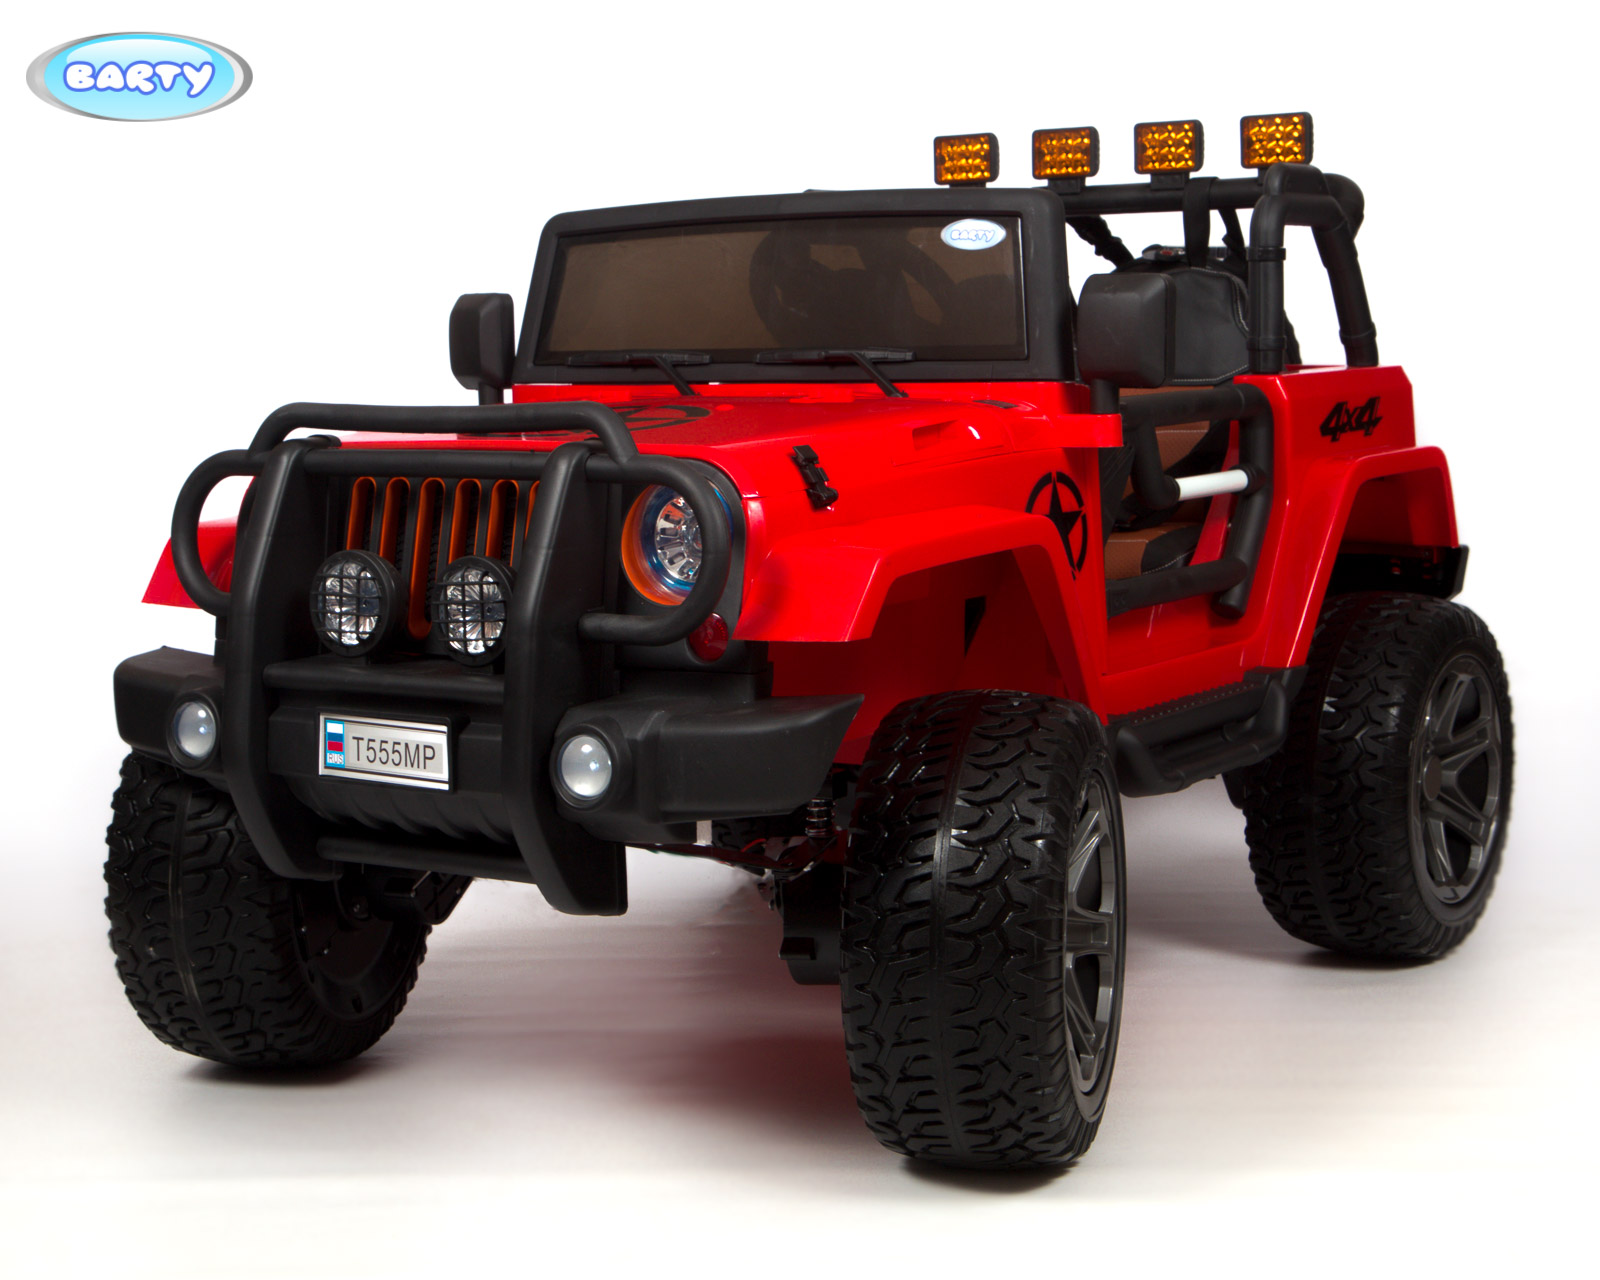  Электромобиль Jeep Wrangler (Красный)  Т555МР